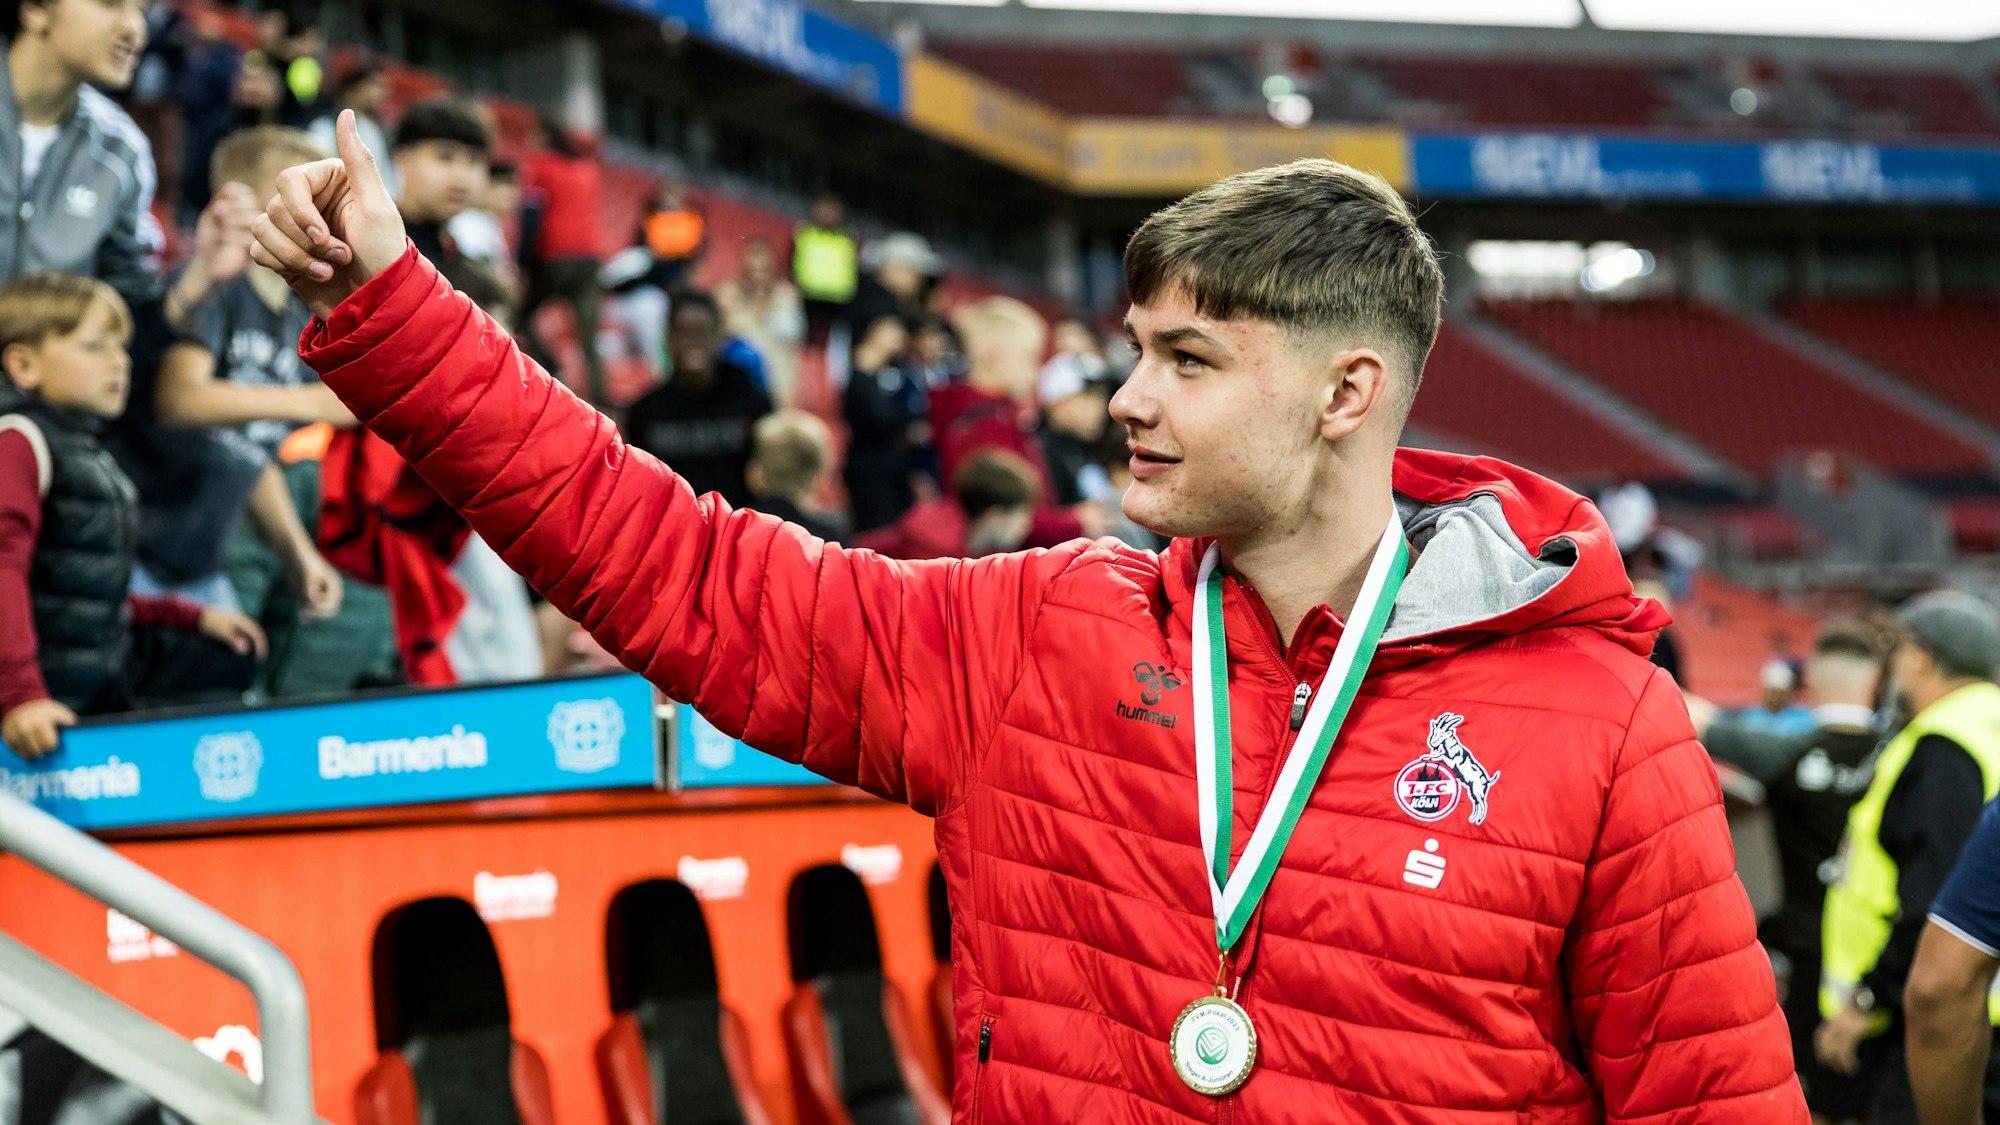 FC-Spieler Jaka Cuber Potocnik nach dem Sieg im FVM-Pokal der A-Junioren gegen Bayer 04 Leverkusen. Der Spieler streckt Fans den Siegerdaumen entgegen.